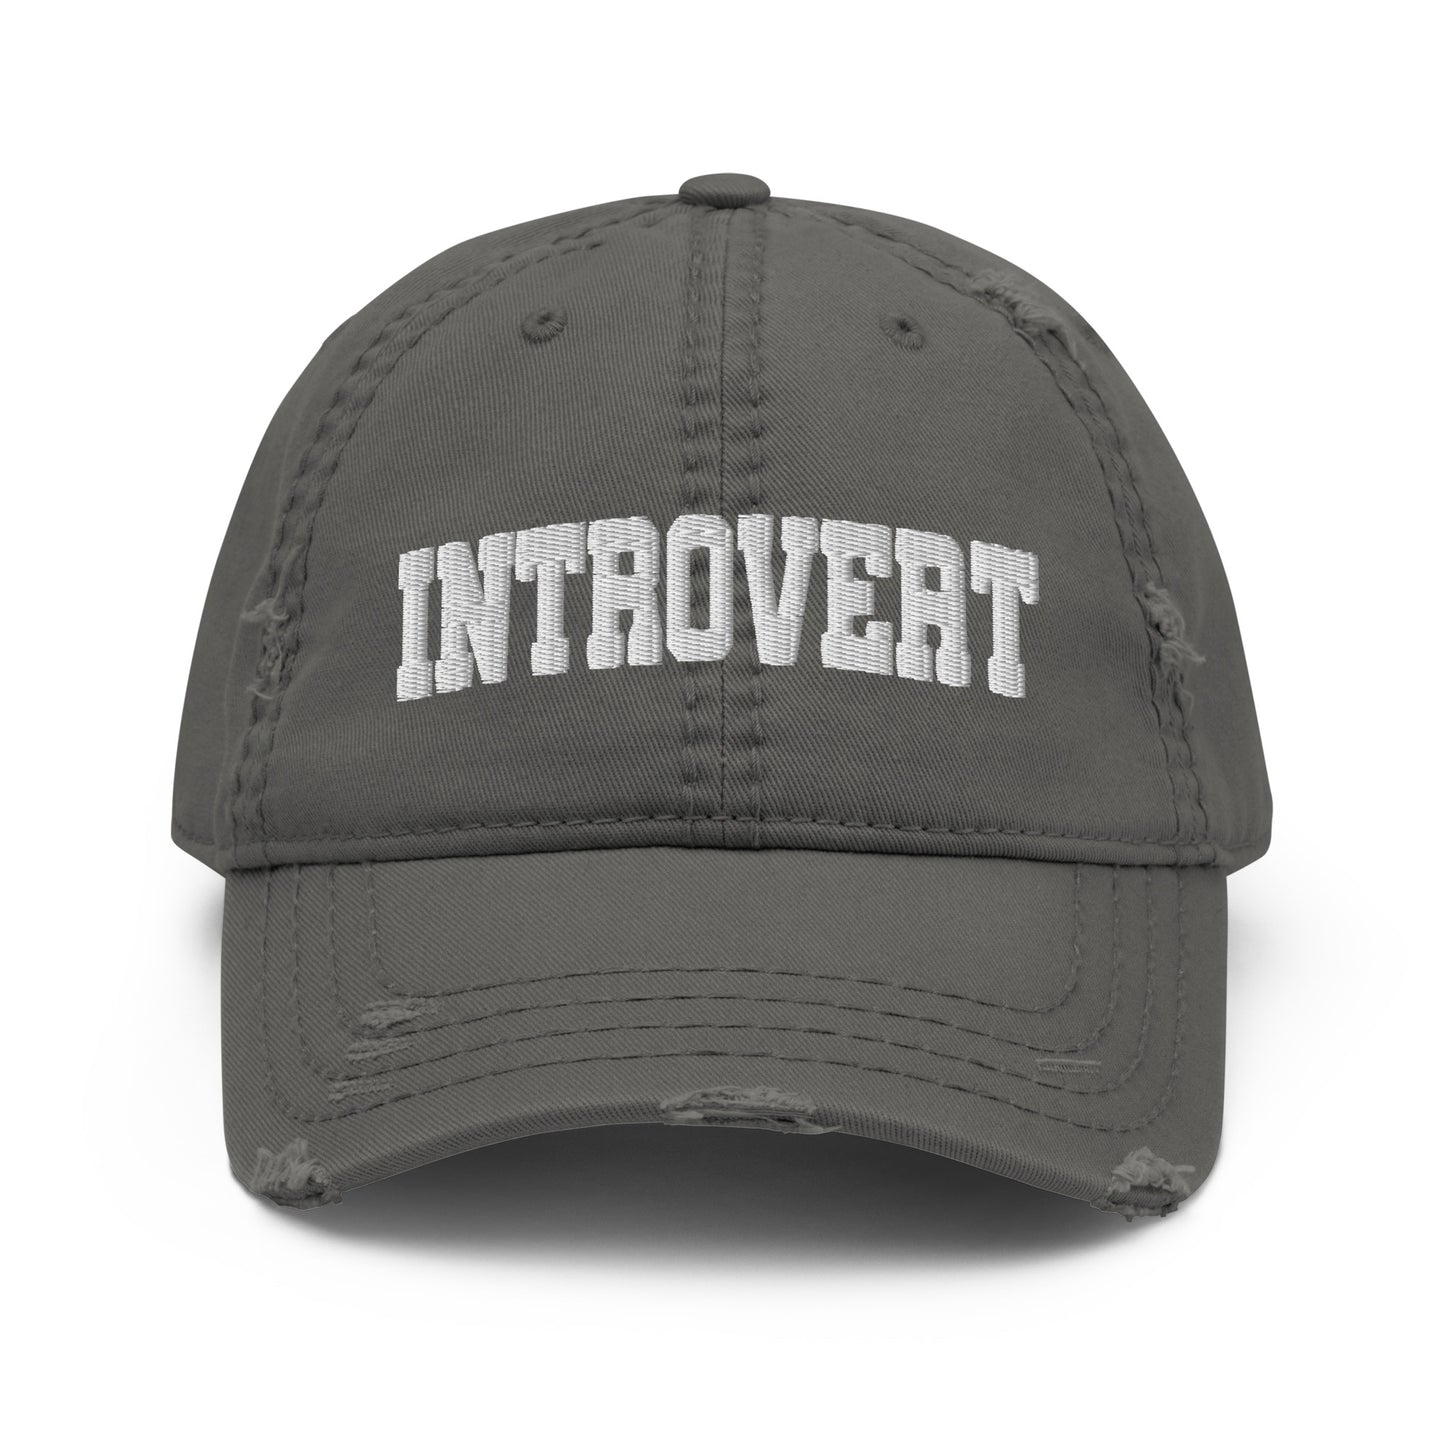 introvert distressed dad hat